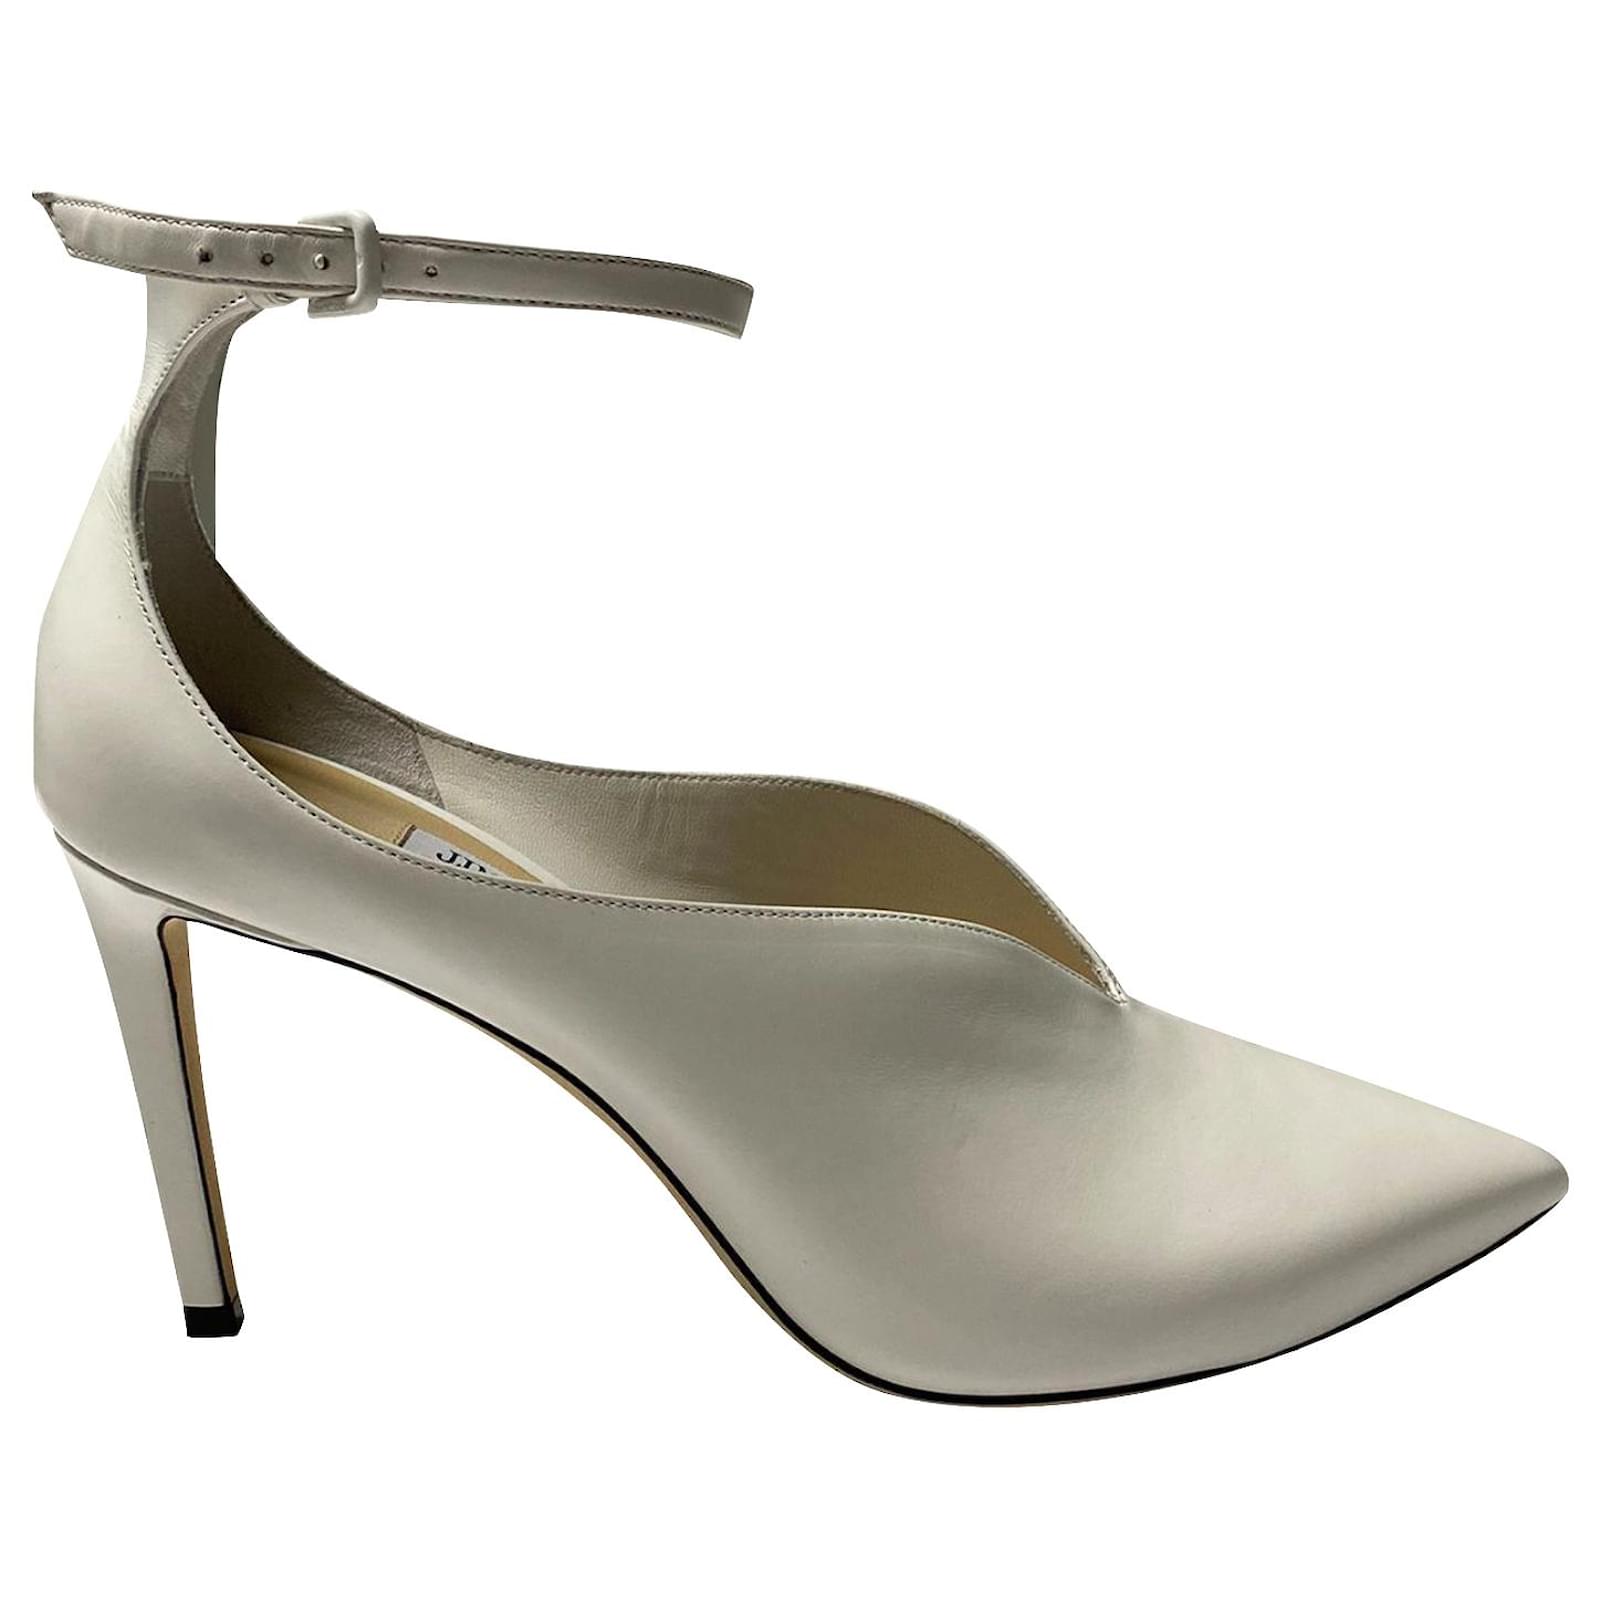 Pony-style calfskin heels Louis Vuitton Beige size 39 EU in Pony